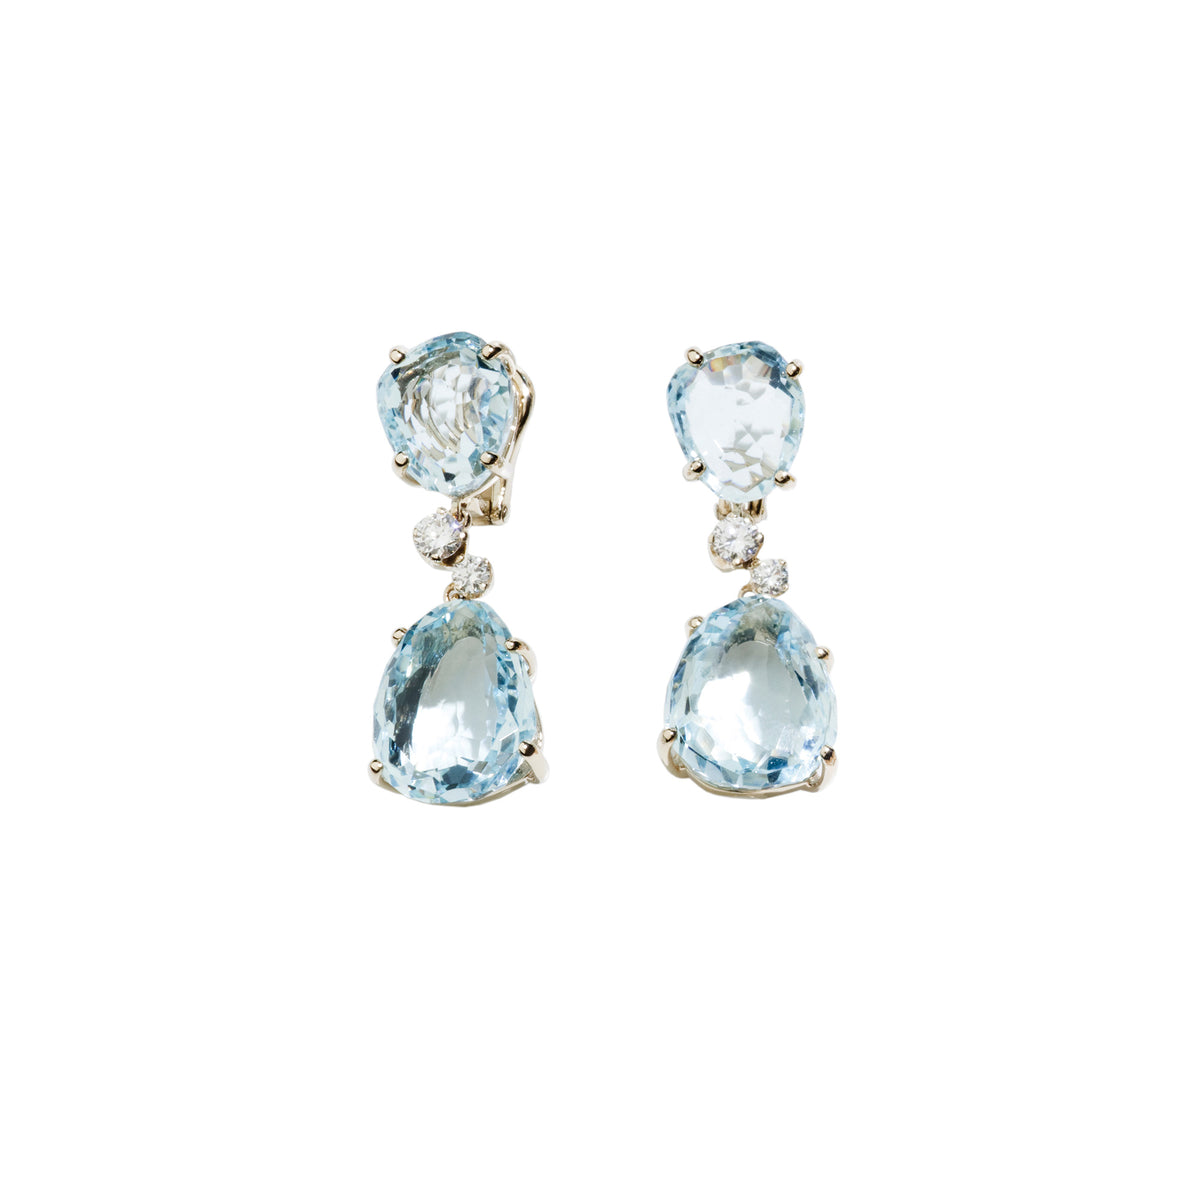 Bahia Earrings in 18k White Gold with Aquamarine and Diamonds - Orsini Jewellers NZ